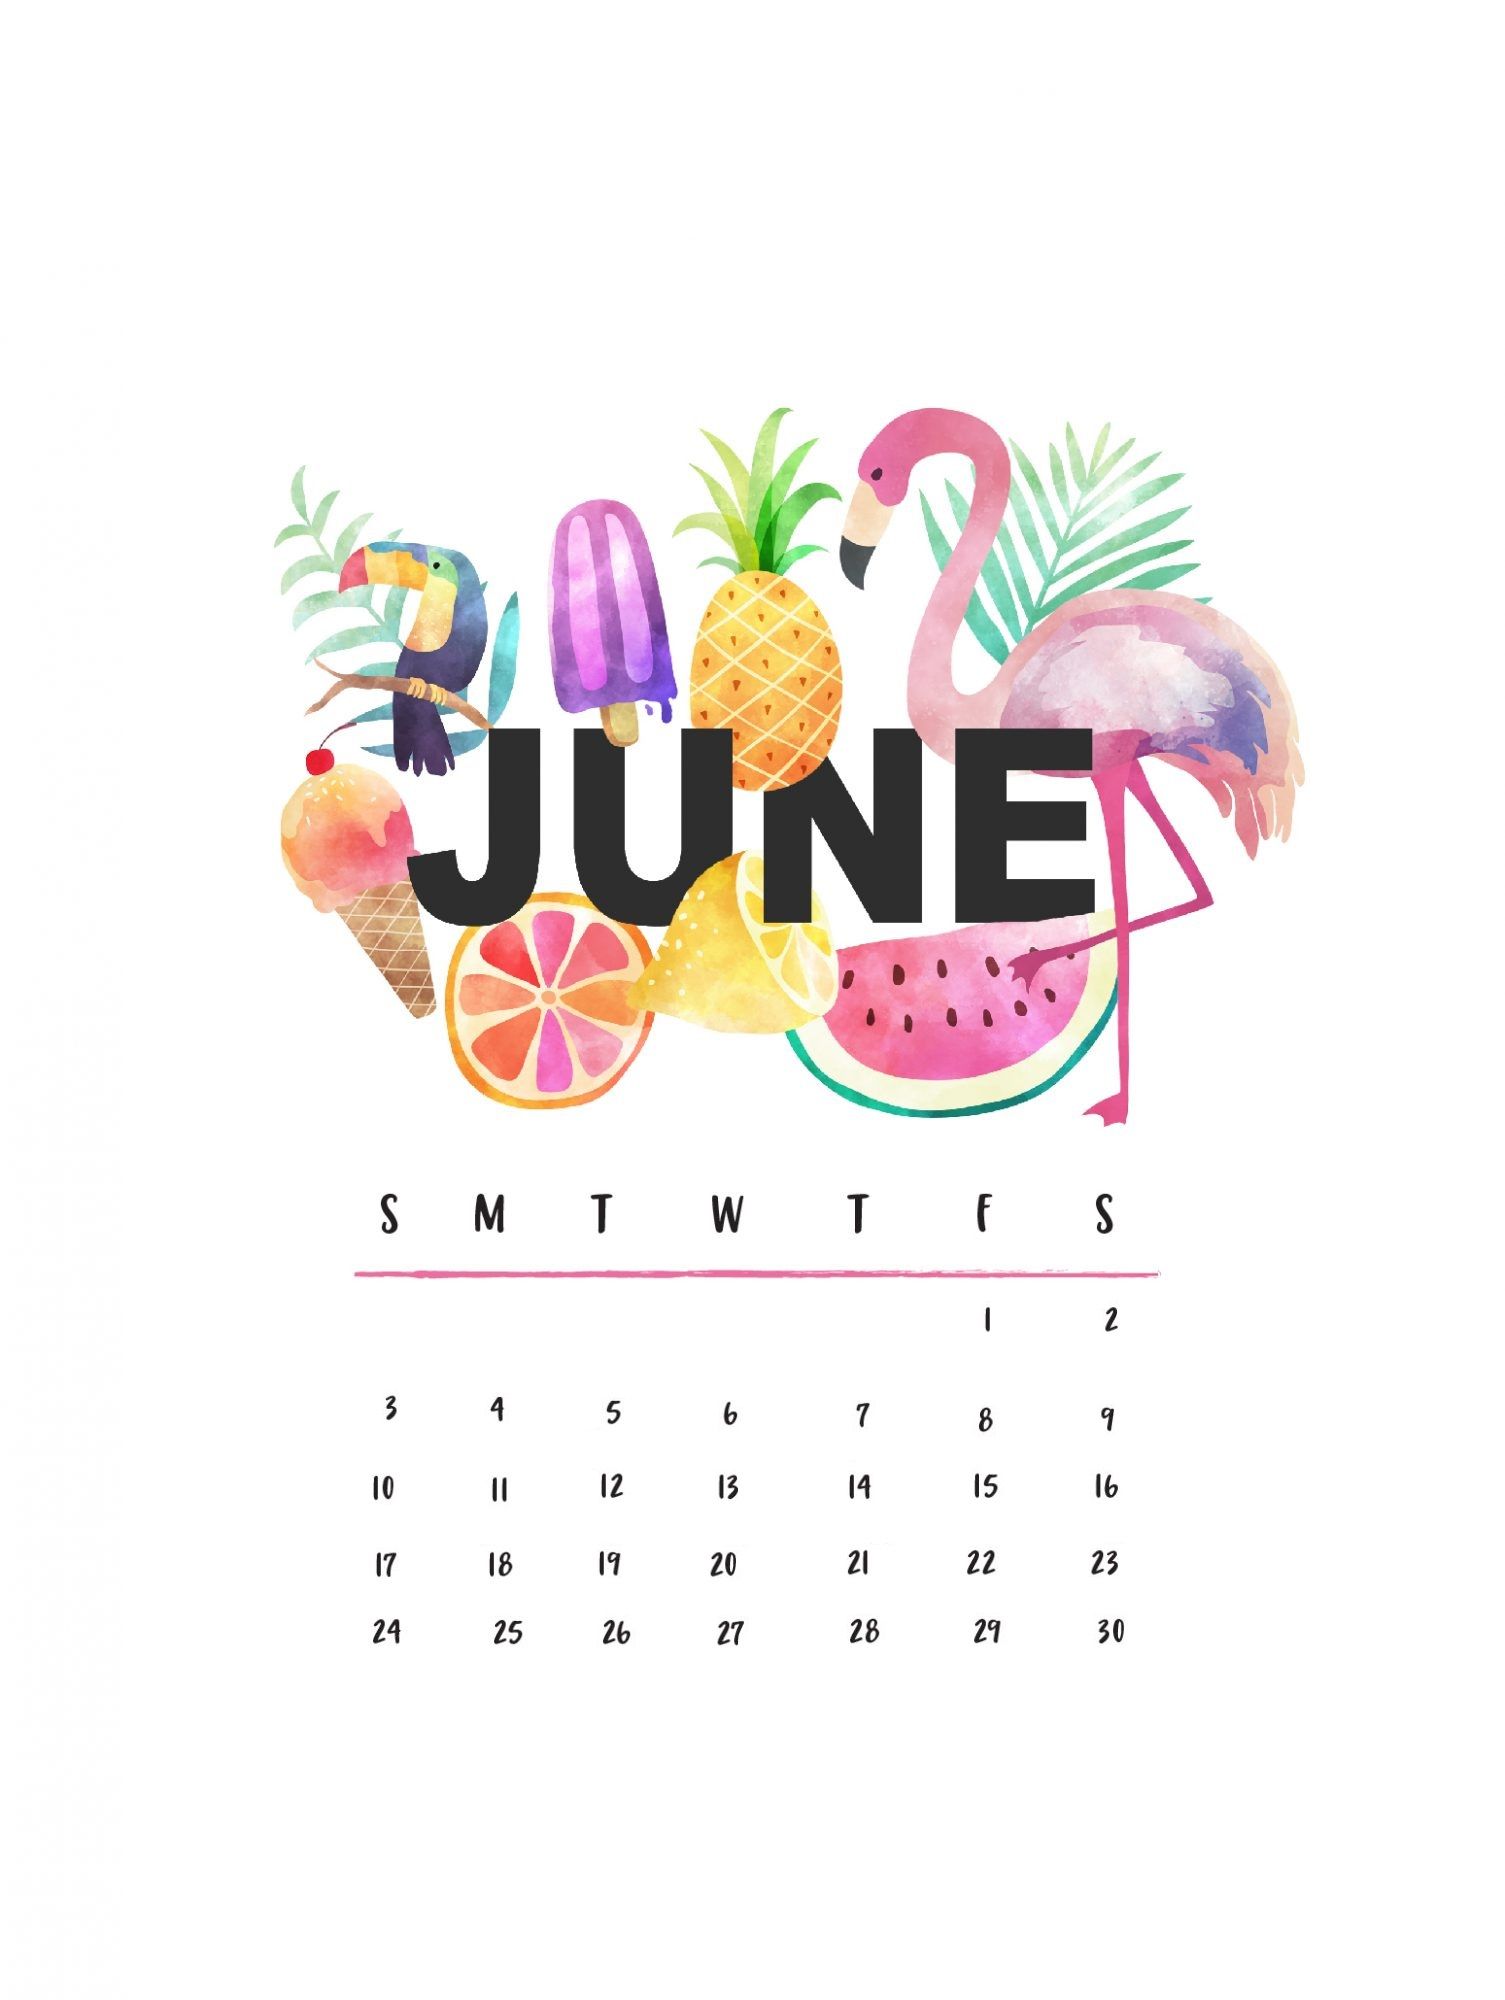 Beautiful June iPhone Calendar Wallpaper